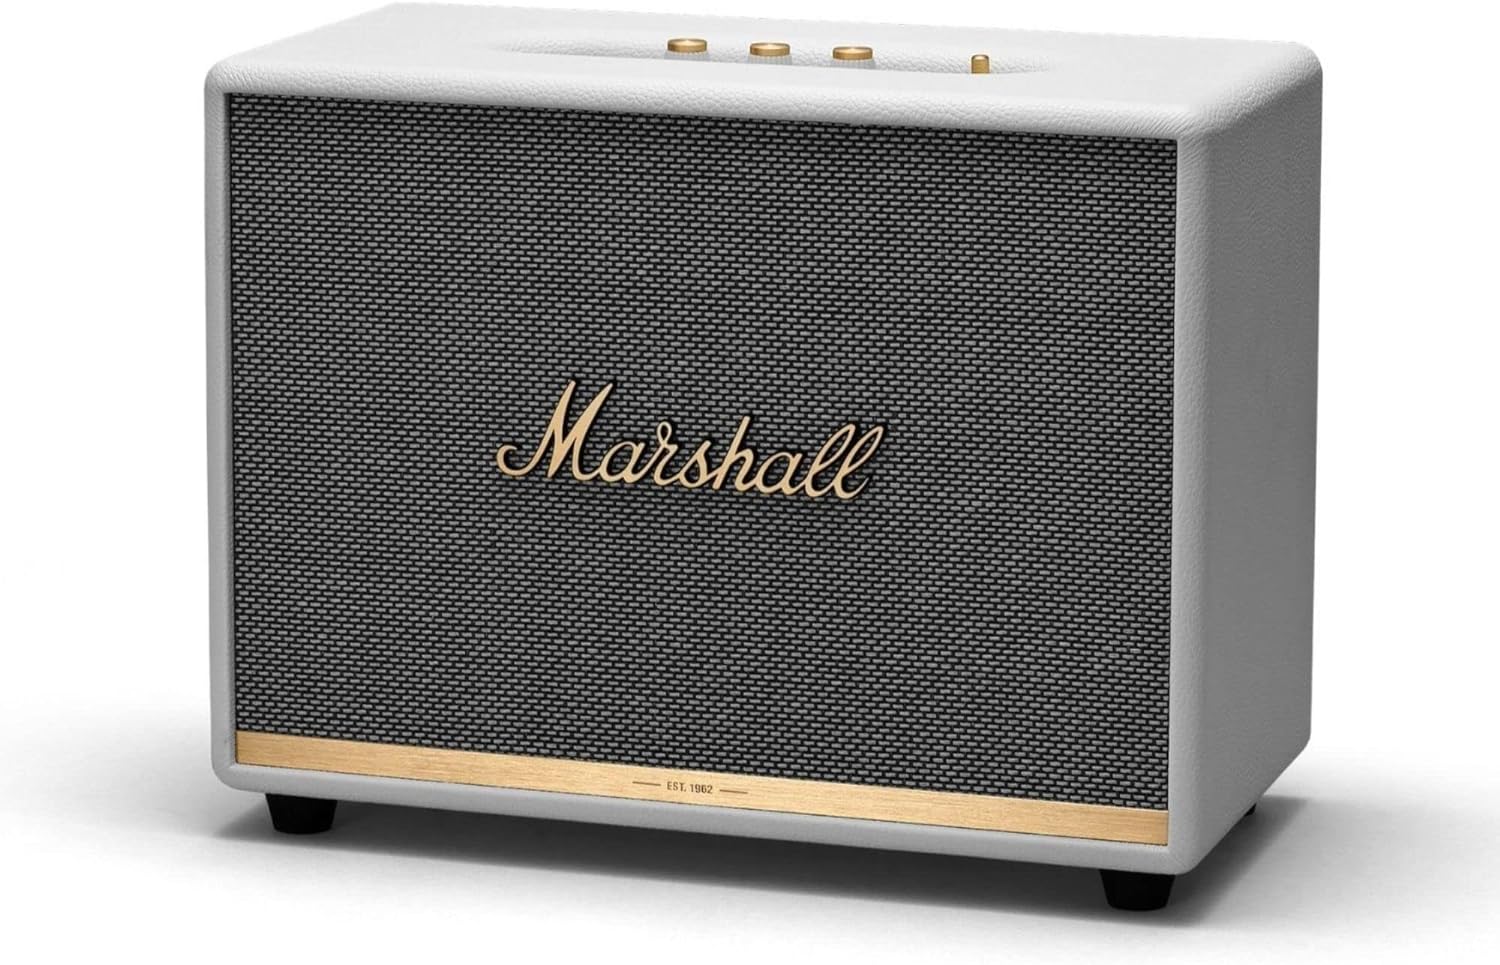 1002491 - Marshall Woburn II Bluetooth Speaker - White - High-quality audio performance. 7340055358248